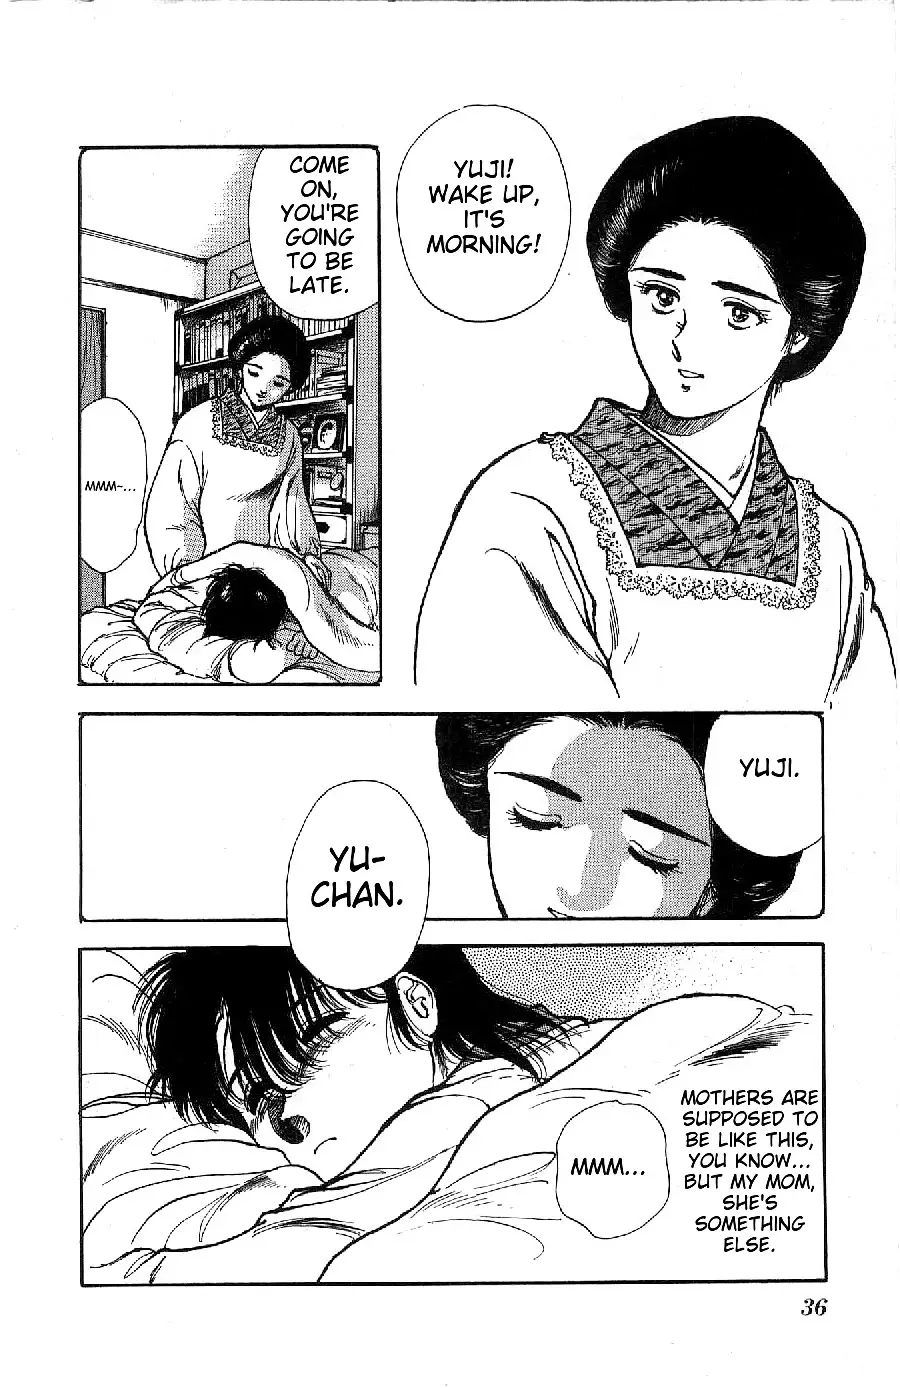 Yagami's Family Affairs - 2 page 3-a43de1a5